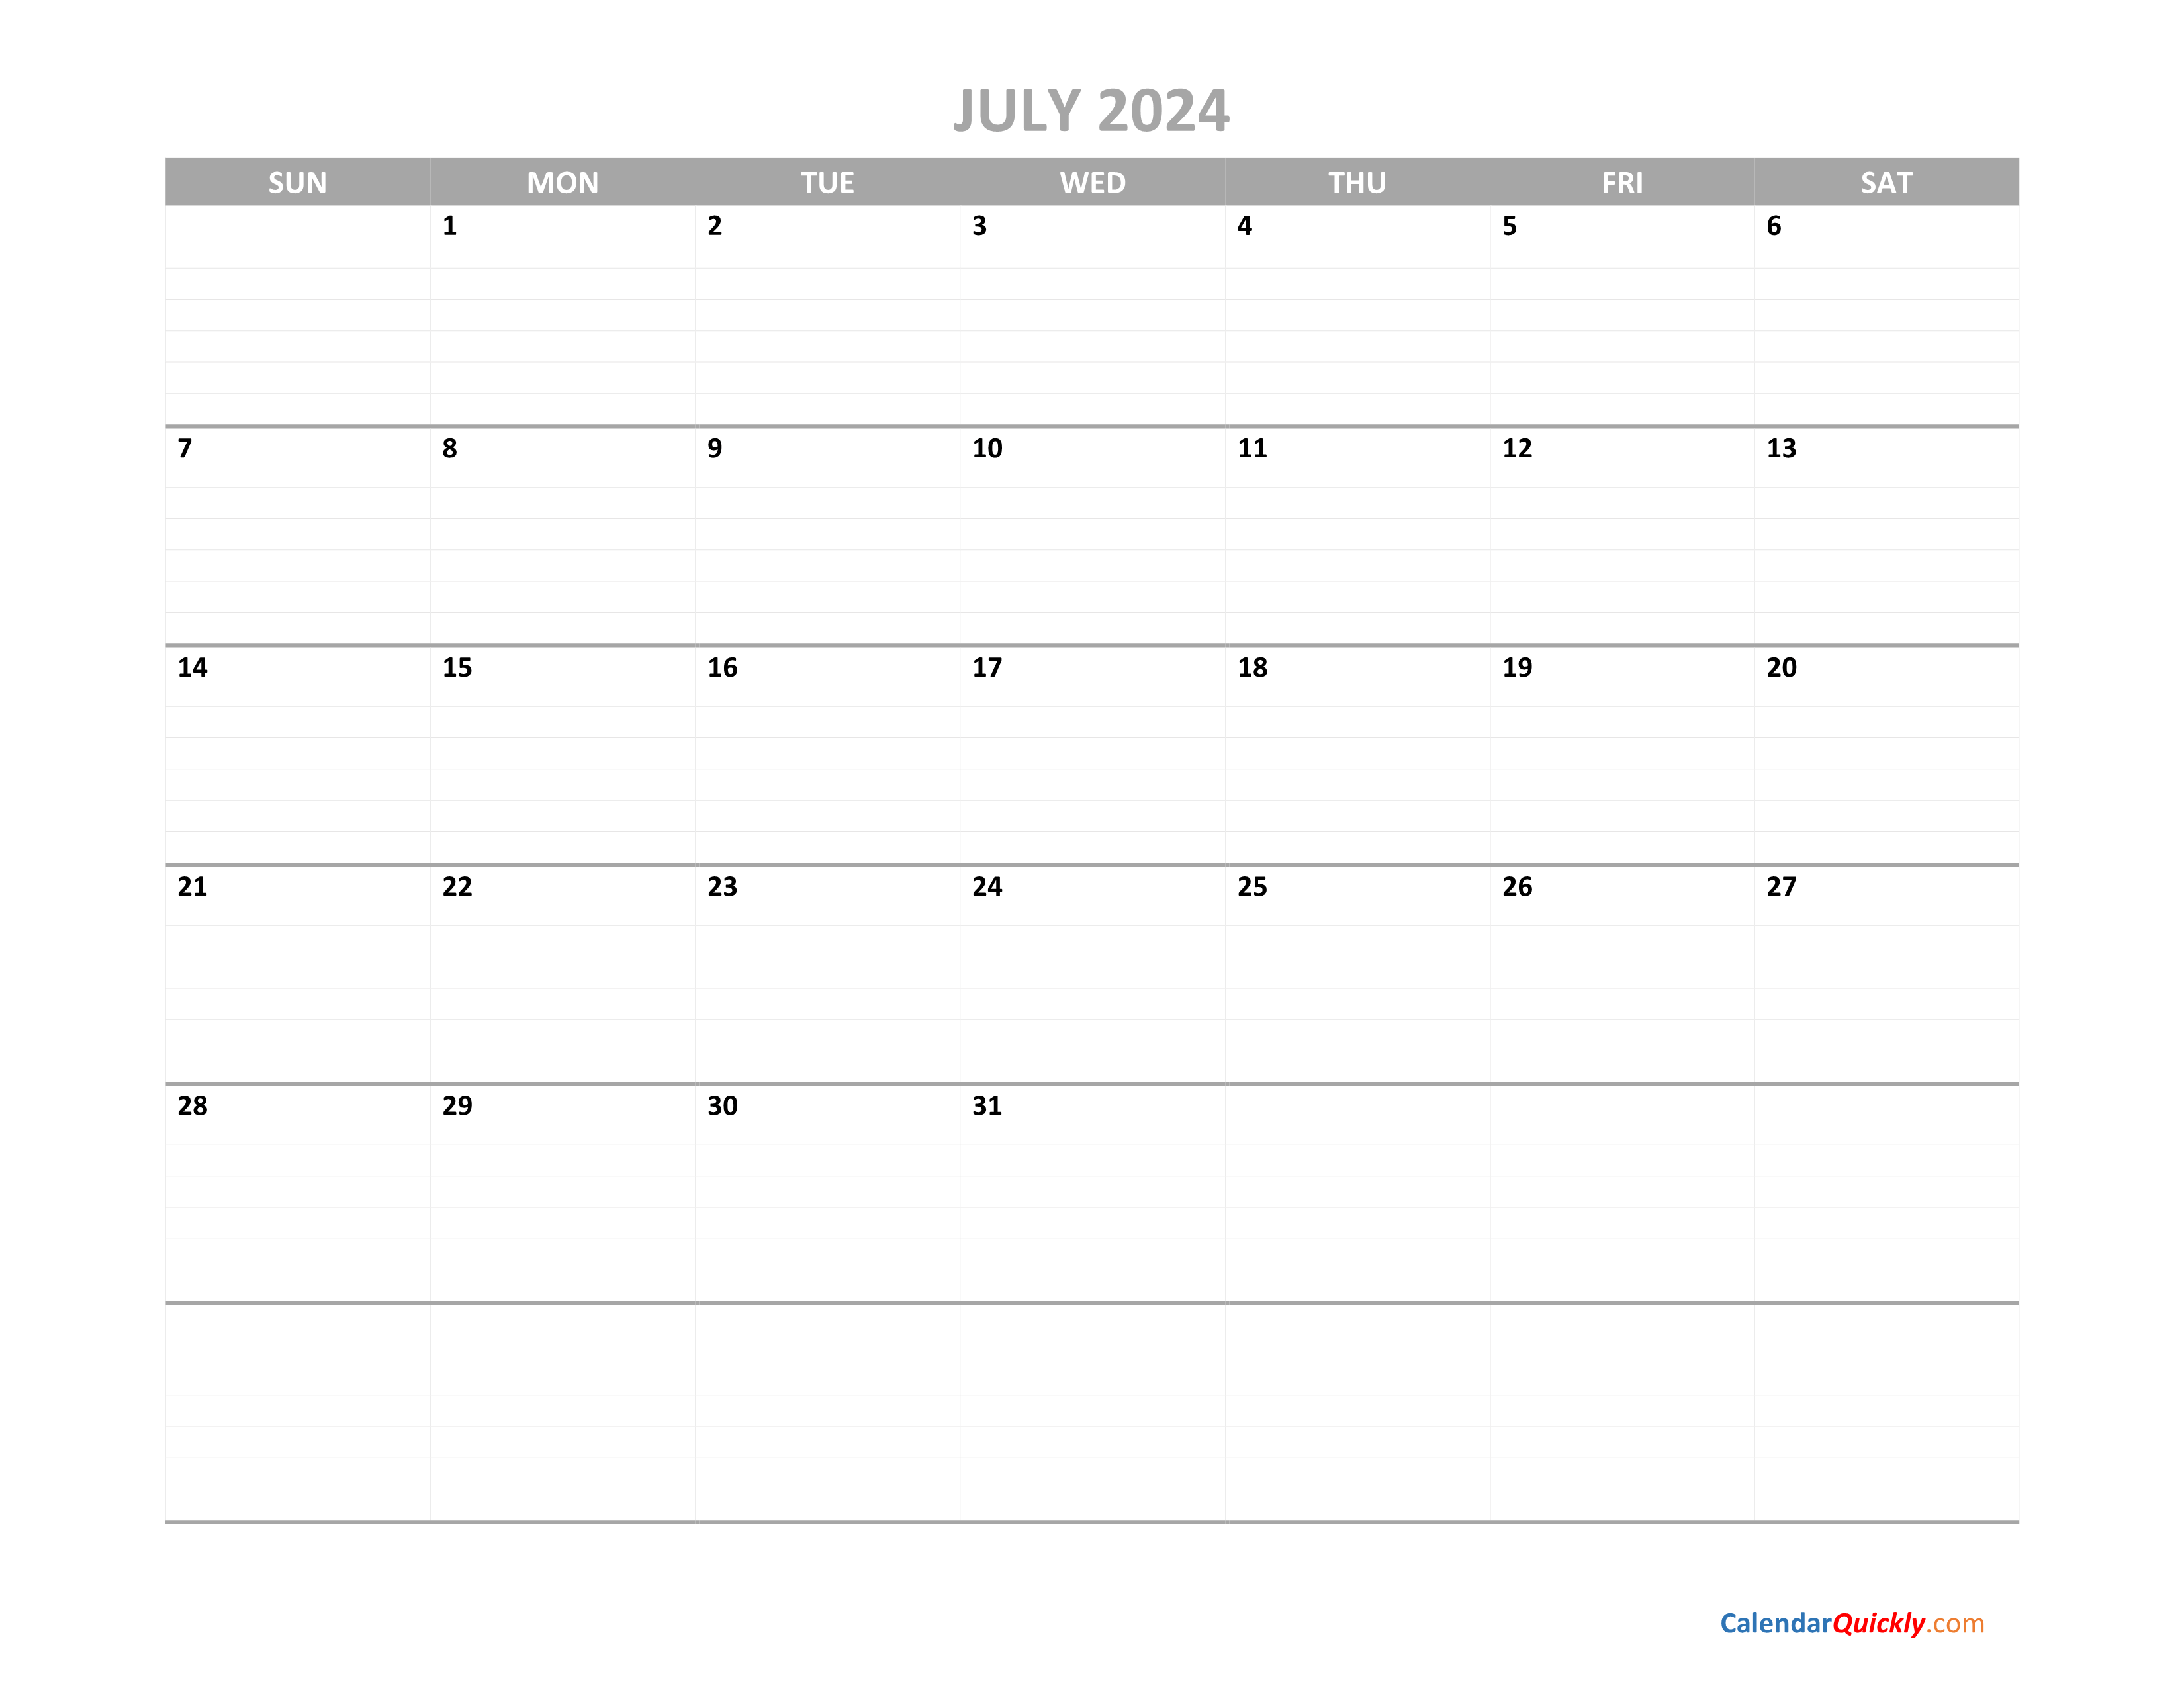 July Calendar 2024 Printable | Calendar Quickly